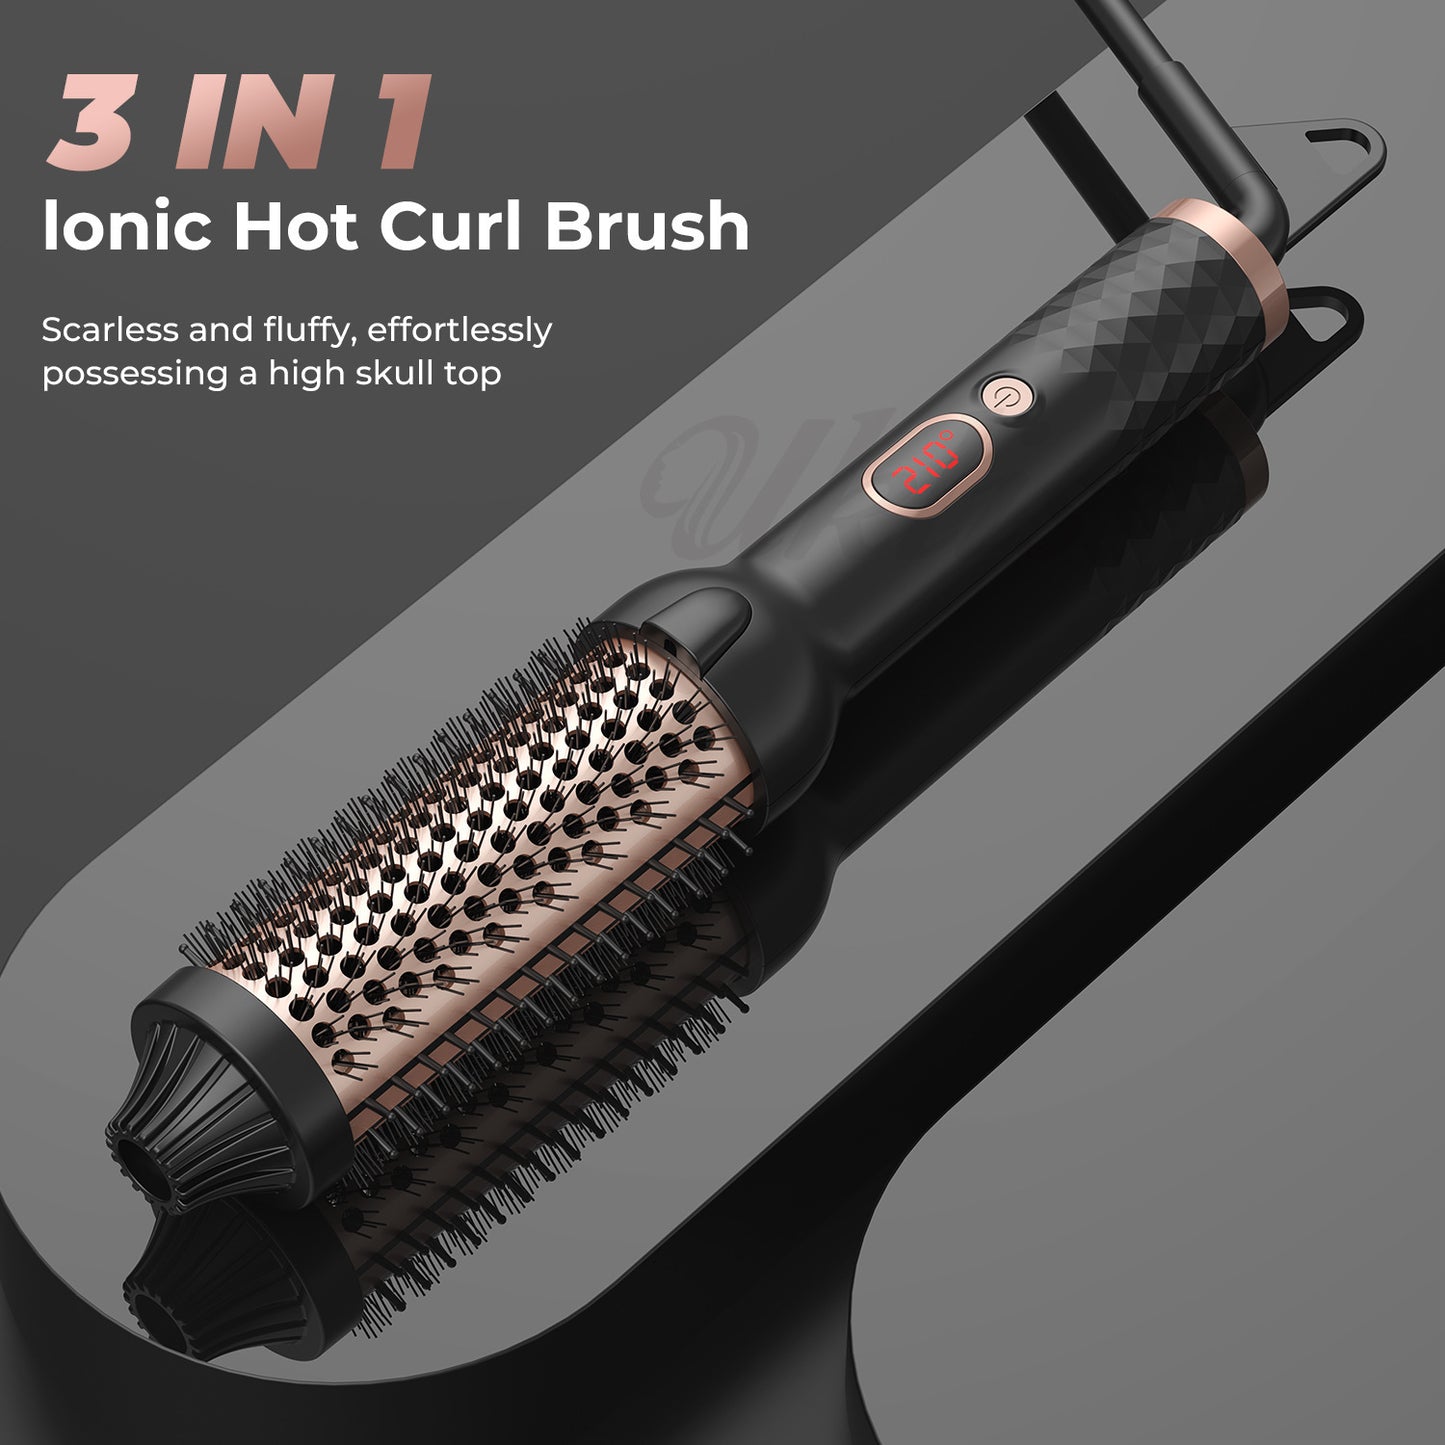 3 in 1 lonic hot curl brush